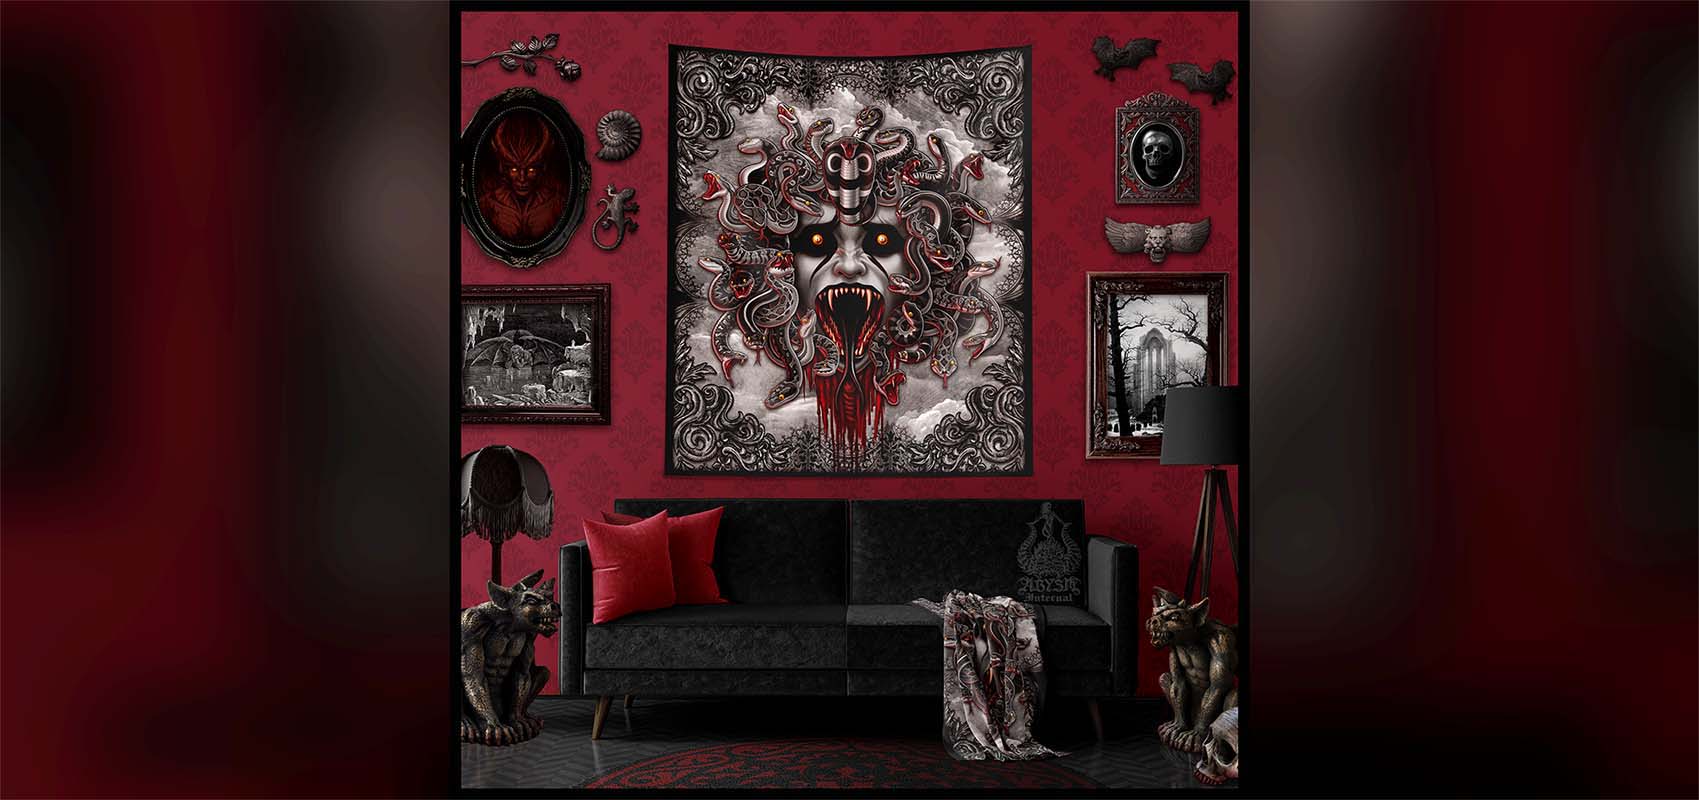 Abysm Internal - Tapestry Medusa Gothic Video Thumb